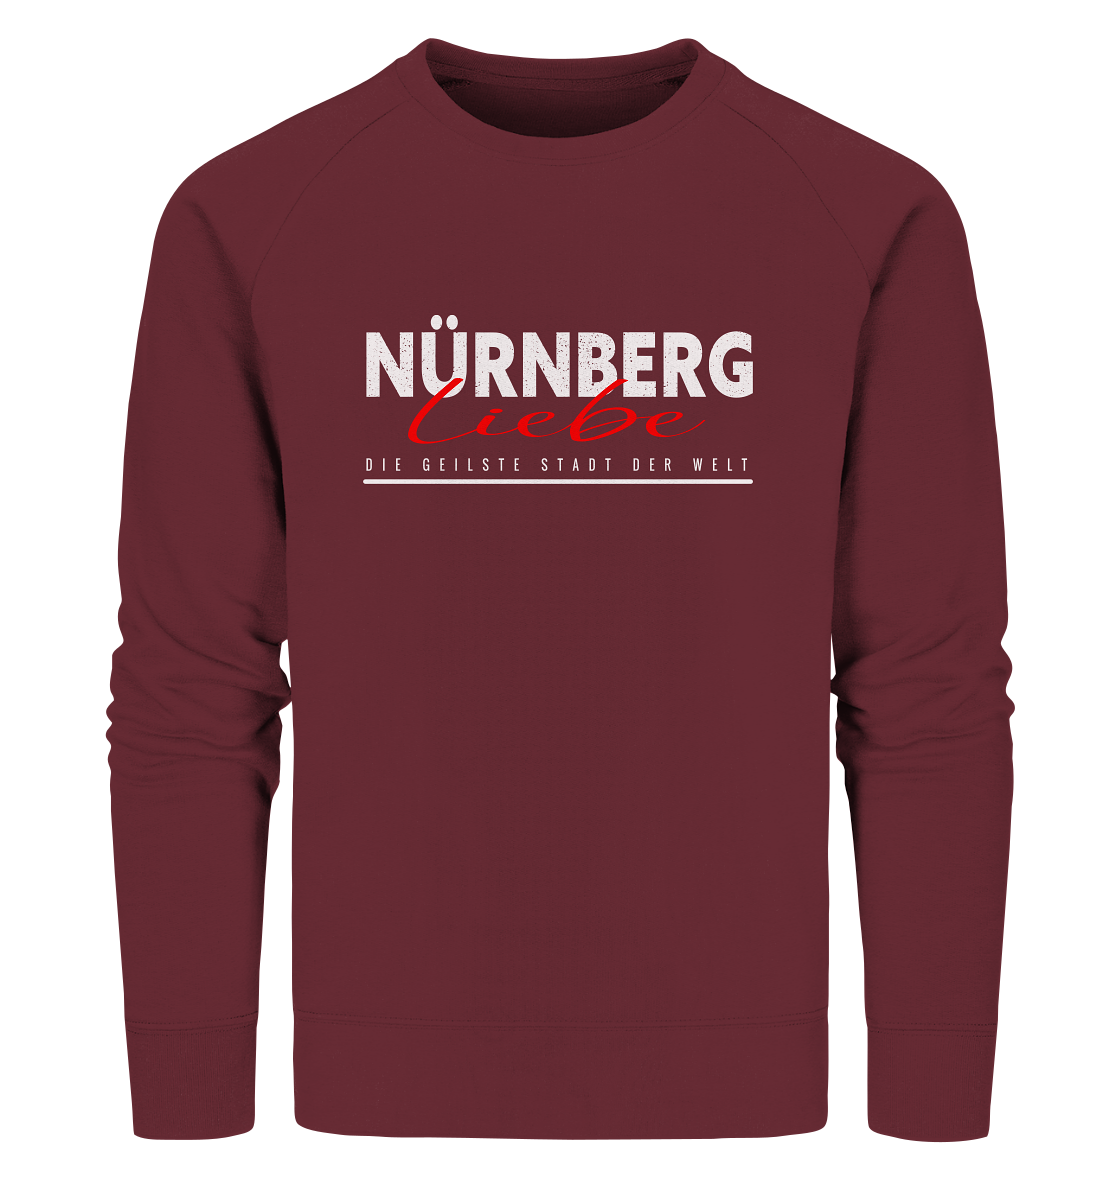 #NÜRNBERGLIEBE - Organic Sweatshirt